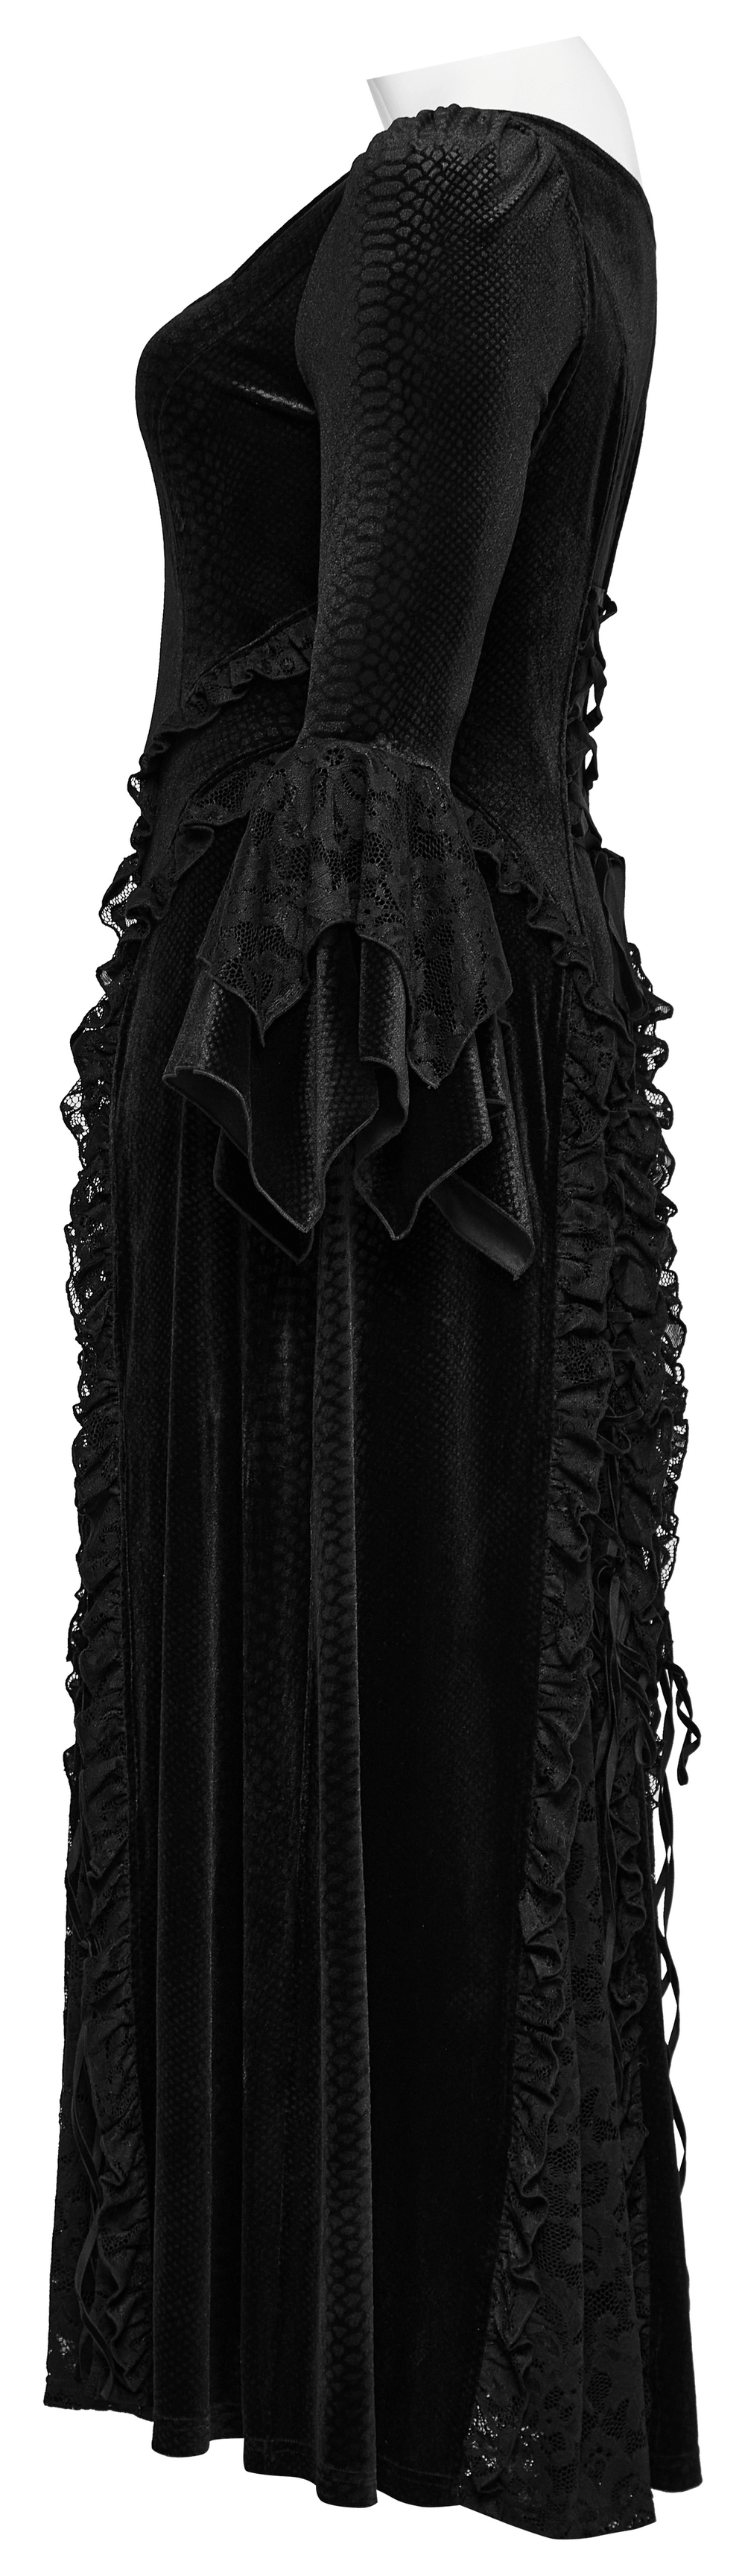 Elegant Gothic Lace Maxi Dress with Bat Neckline